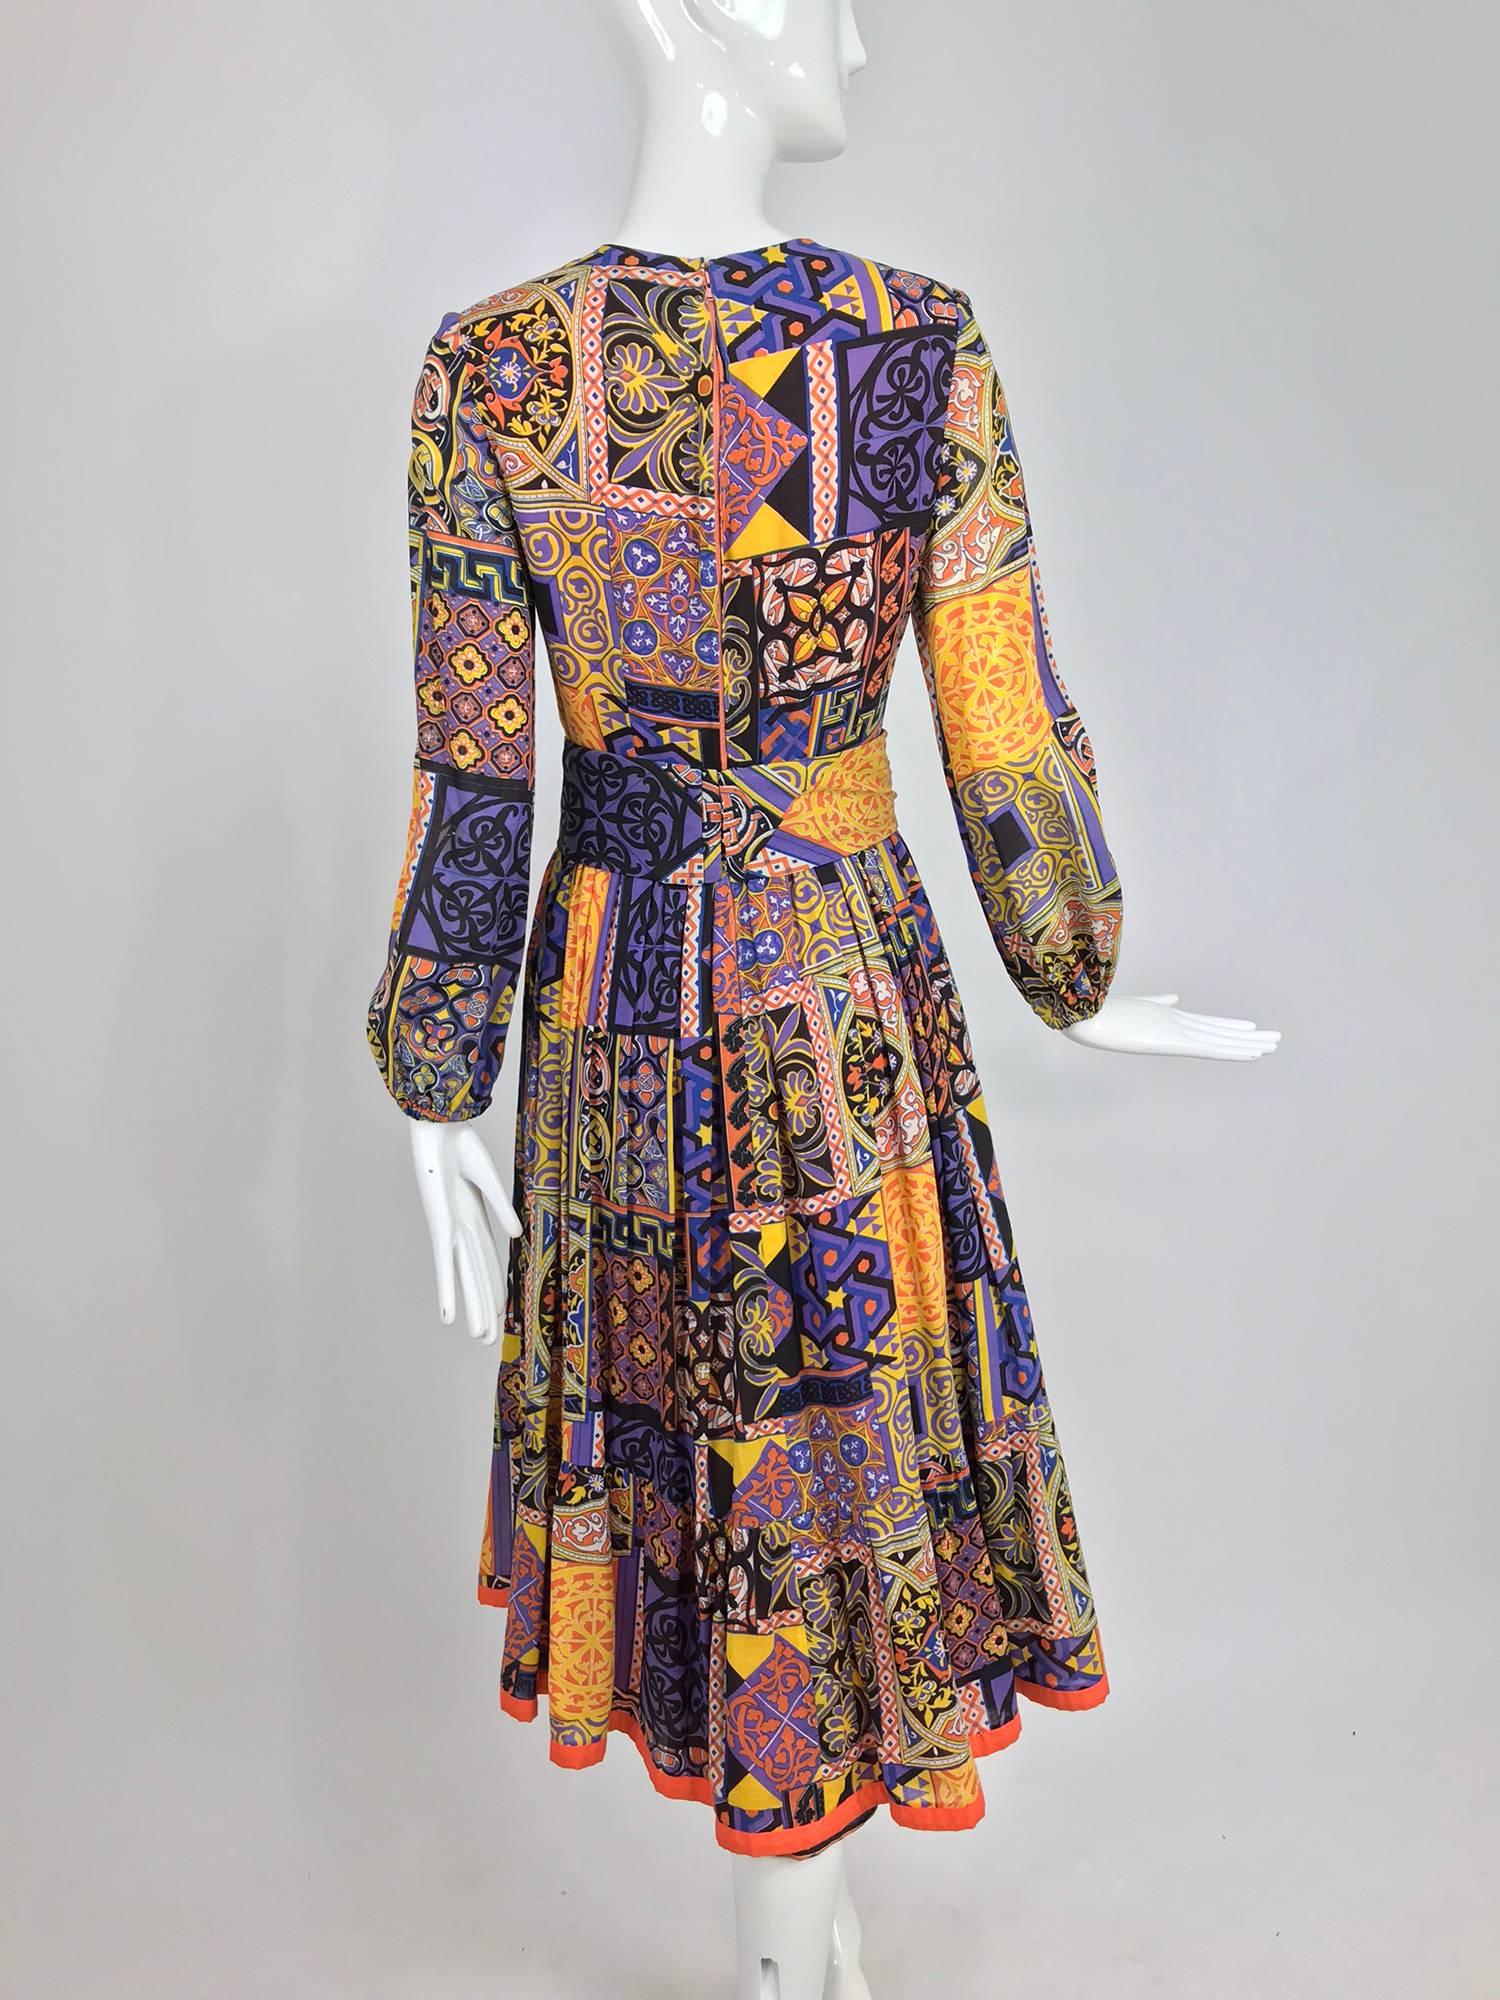 Moorish mosaic cotton print laced front bohemian dress 1960s 5